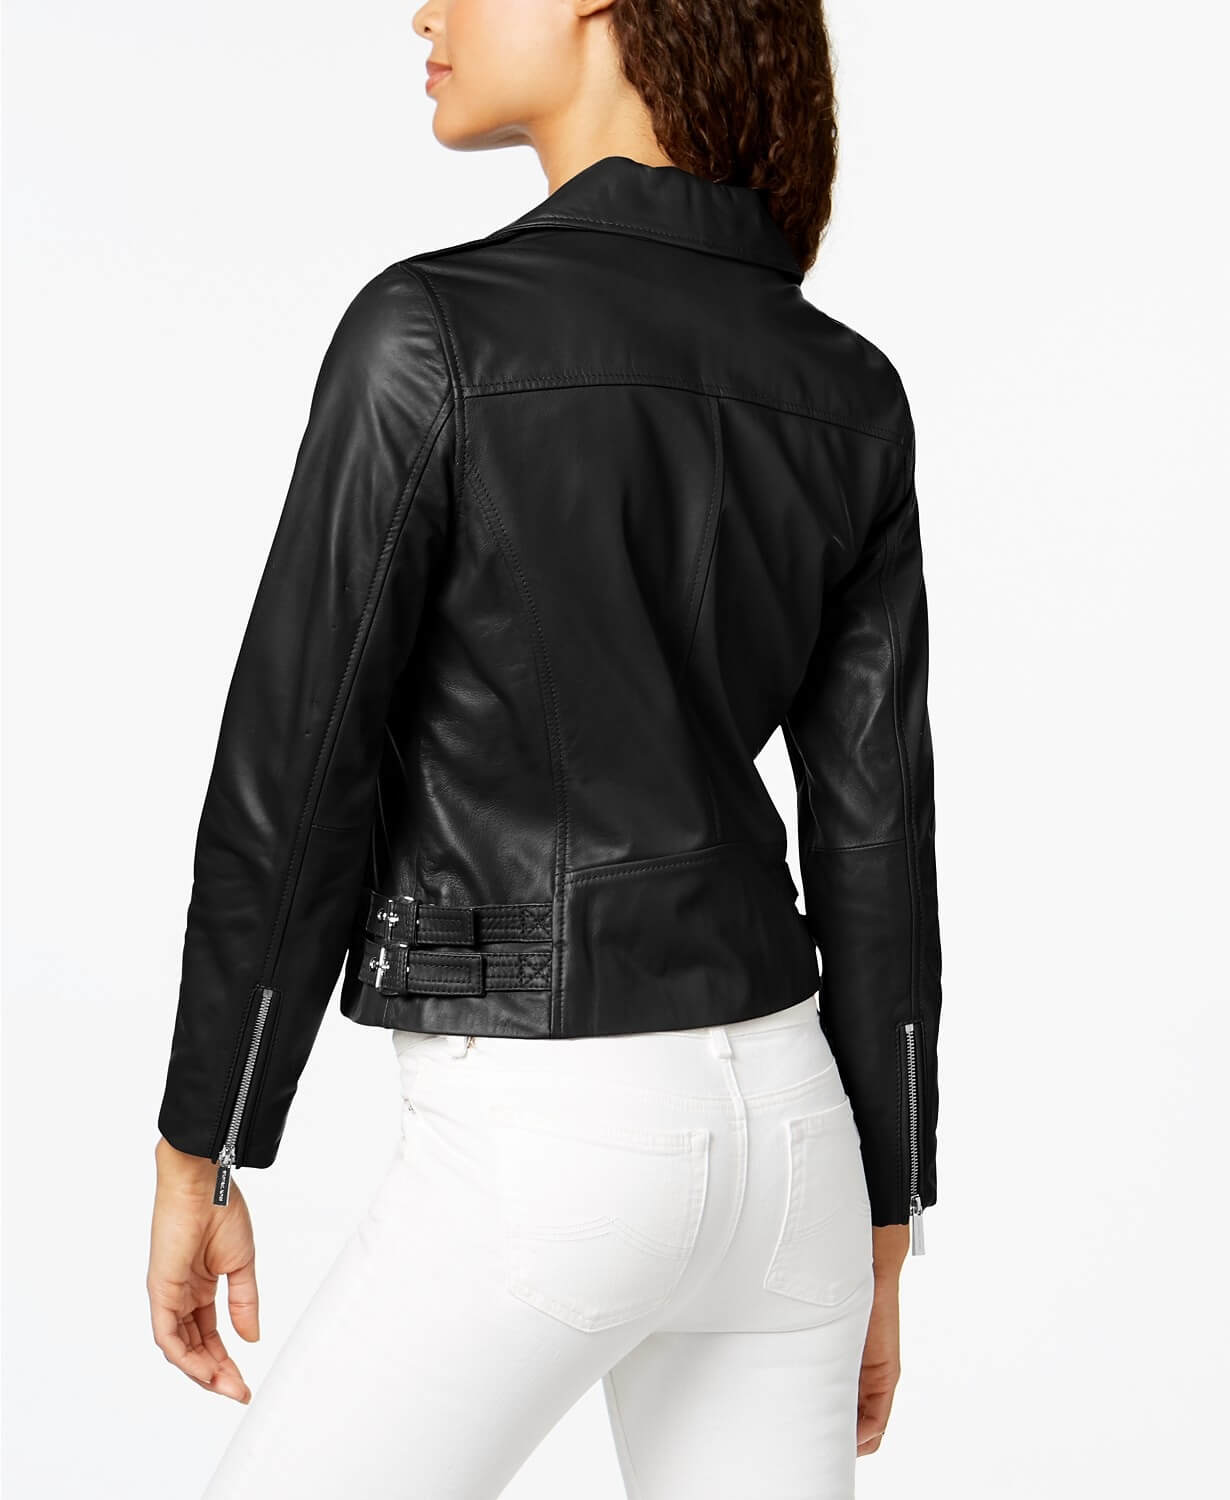 Black Biker Style Leather Jacket For Women